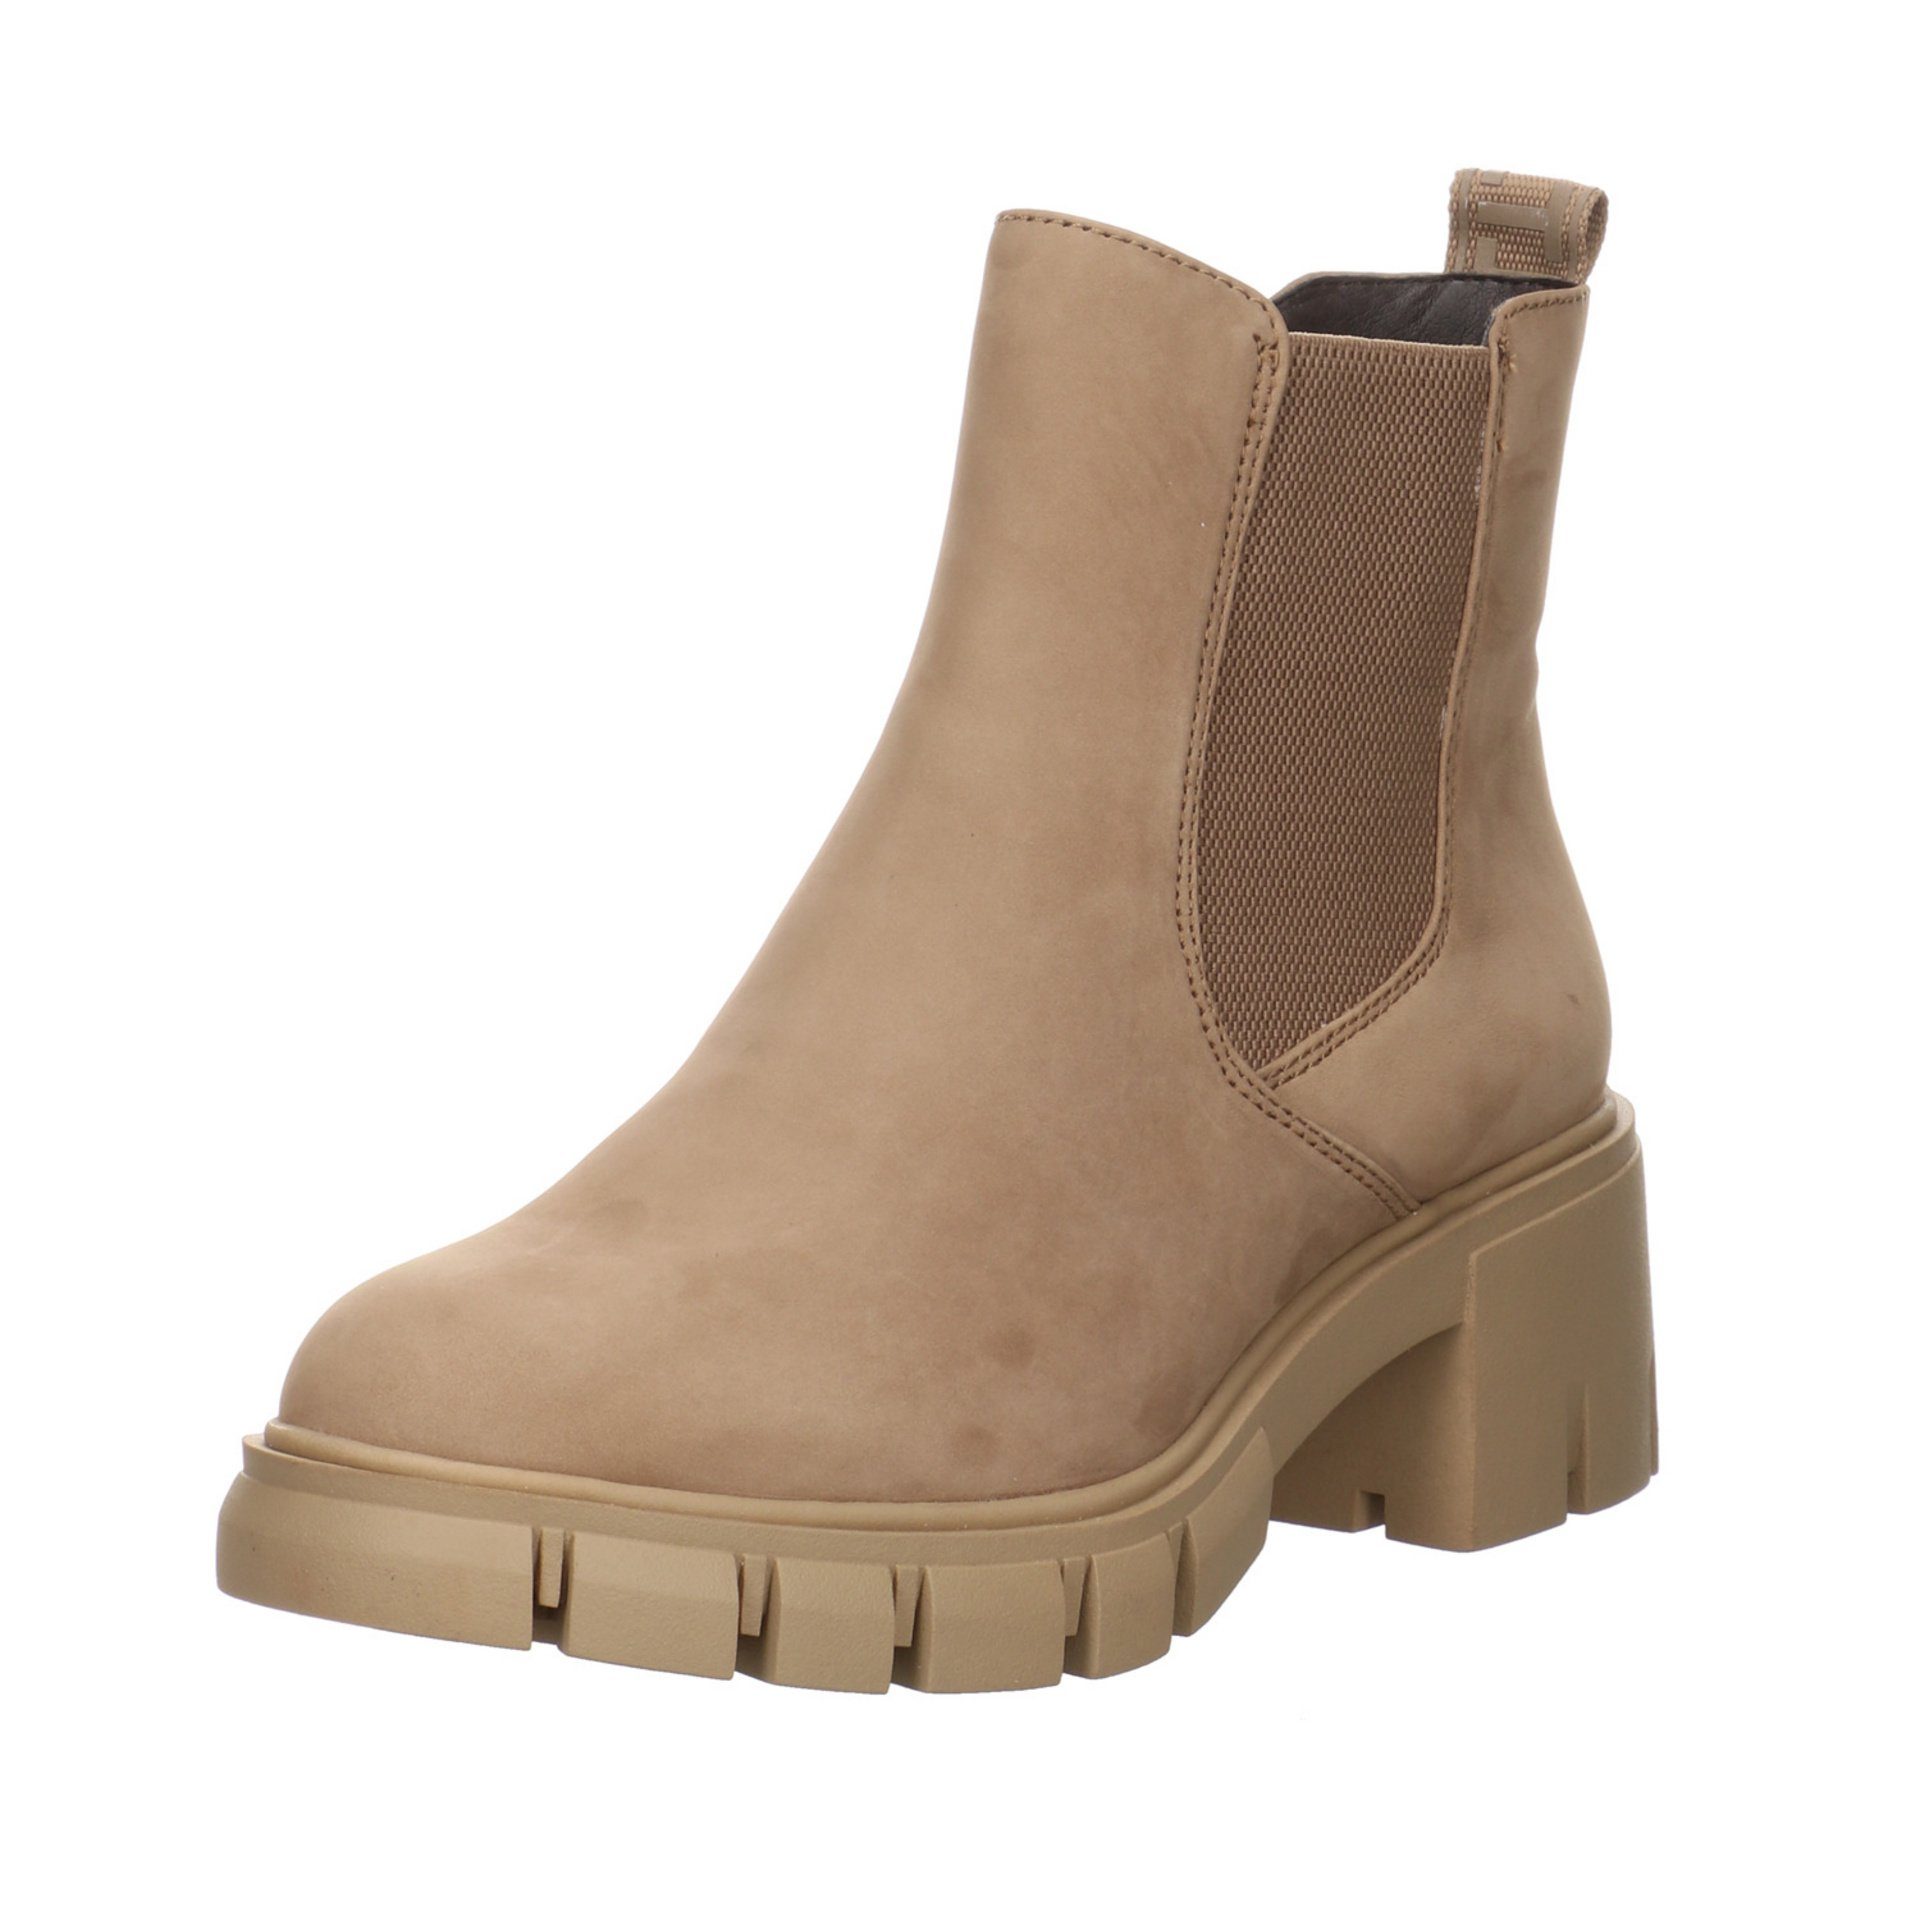 Tamaris Damen Stiefeletten Schuhe Chelsea Boots Stiefelette Leder-/Textilkombination Beige (21203969)